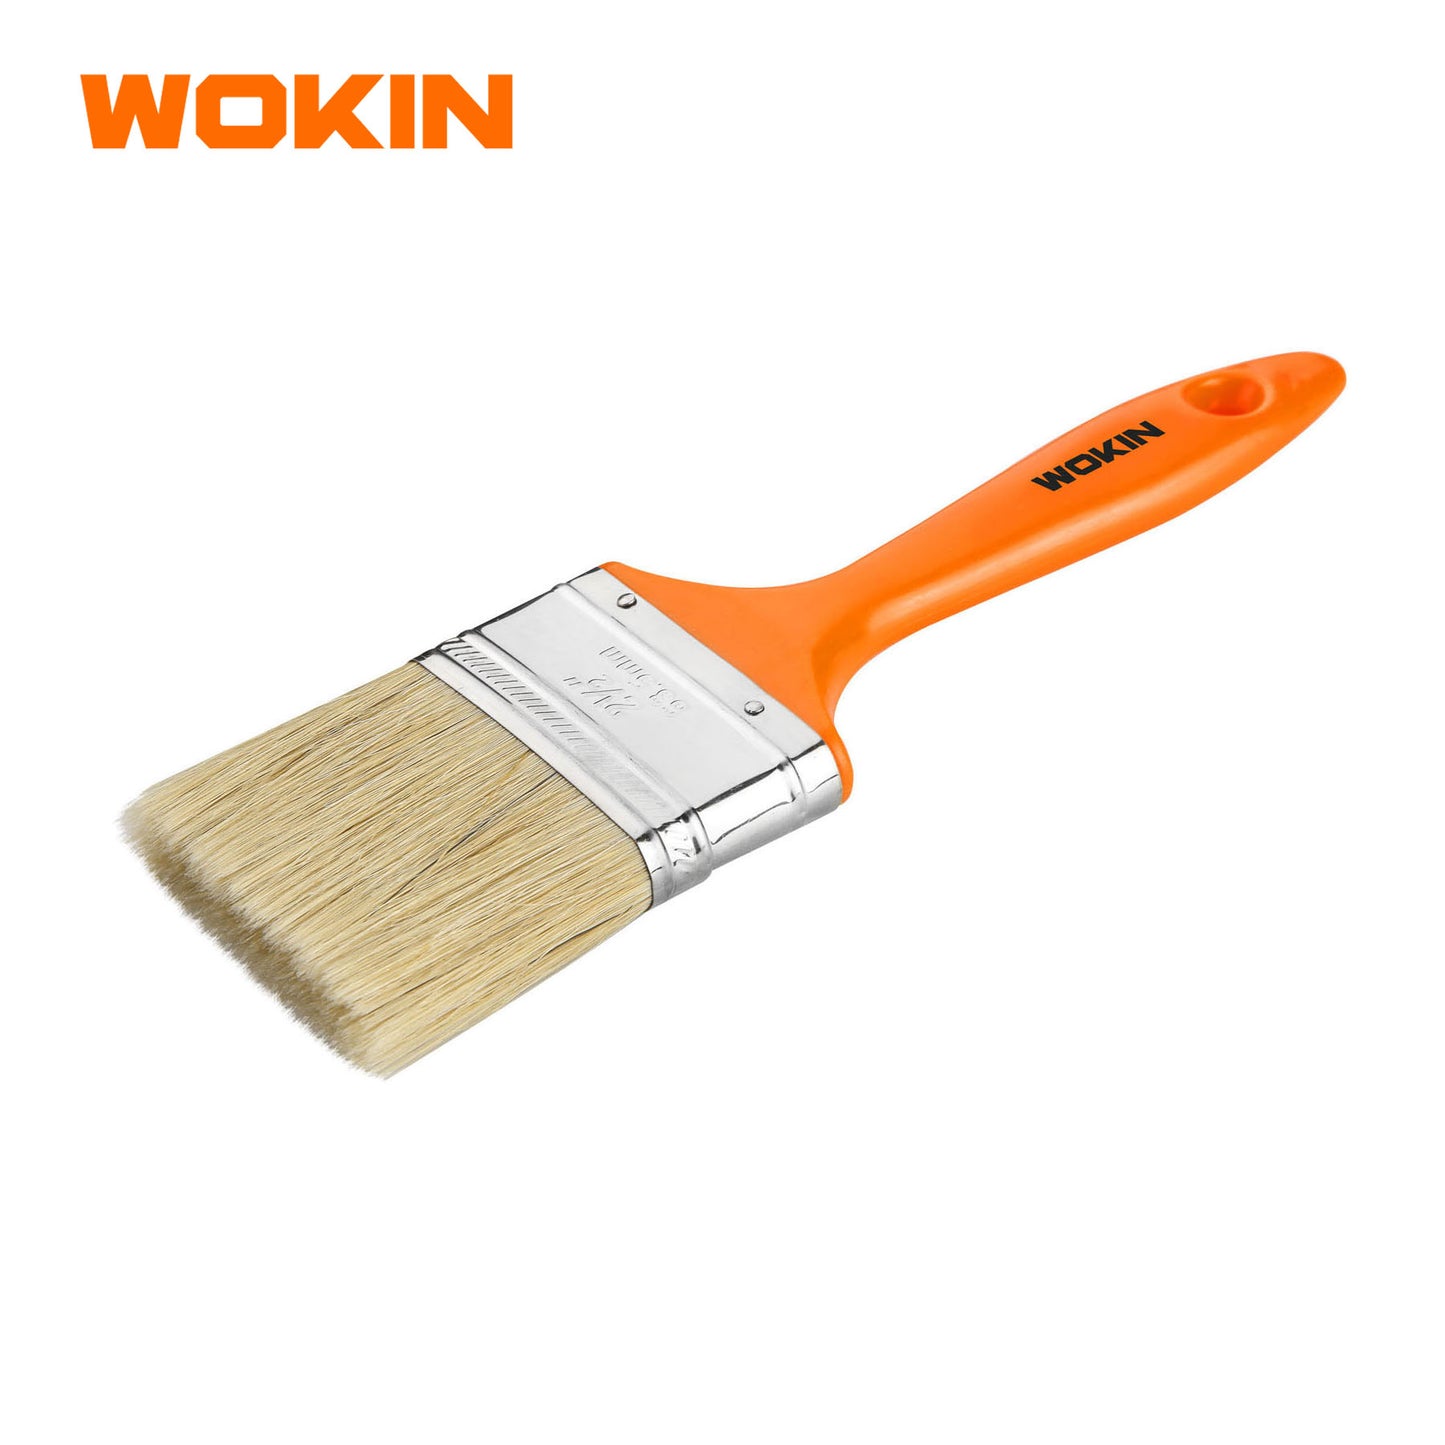 Wokin 4 Inch Flat Paint Brush